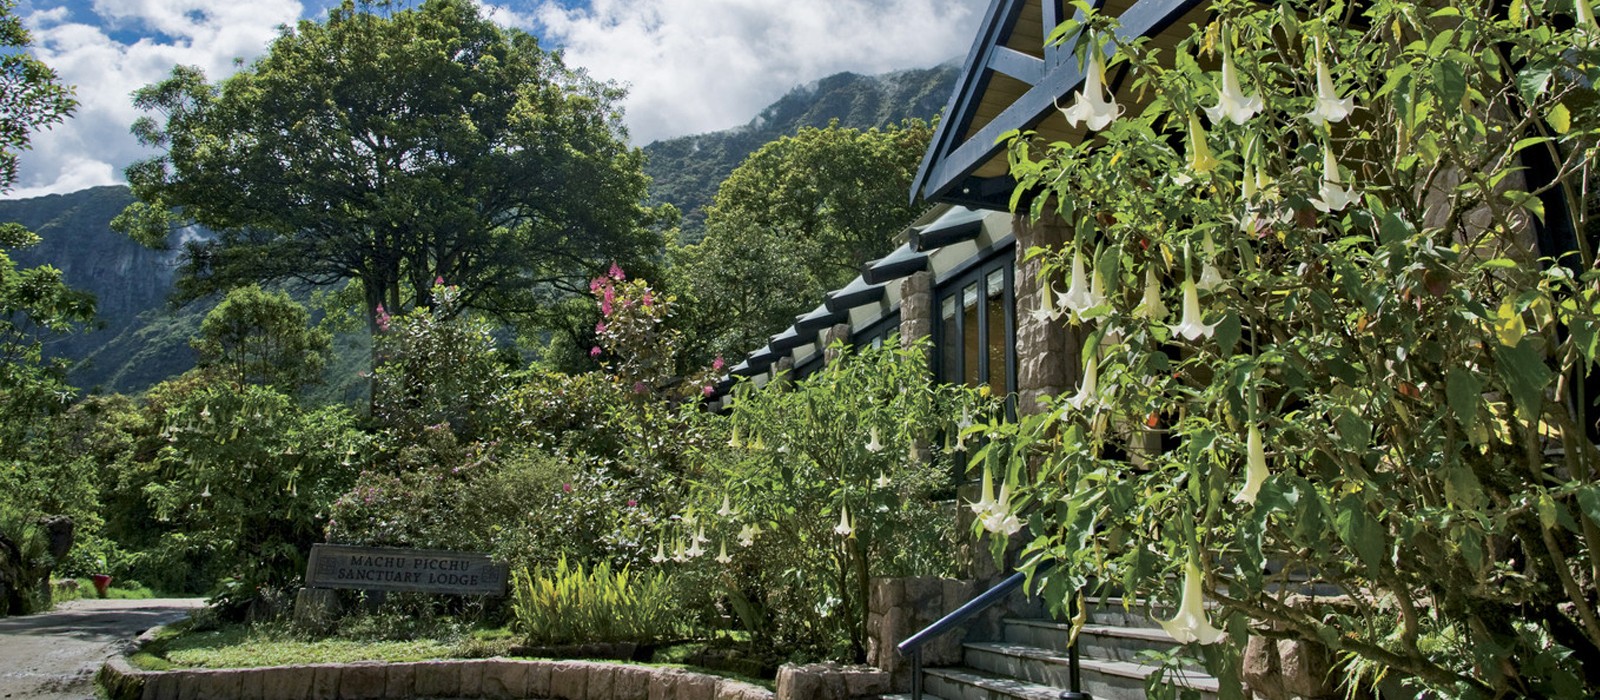 header - Belmond Sanctuary Lodge Machu Picchu - Luxury Peru Holidays